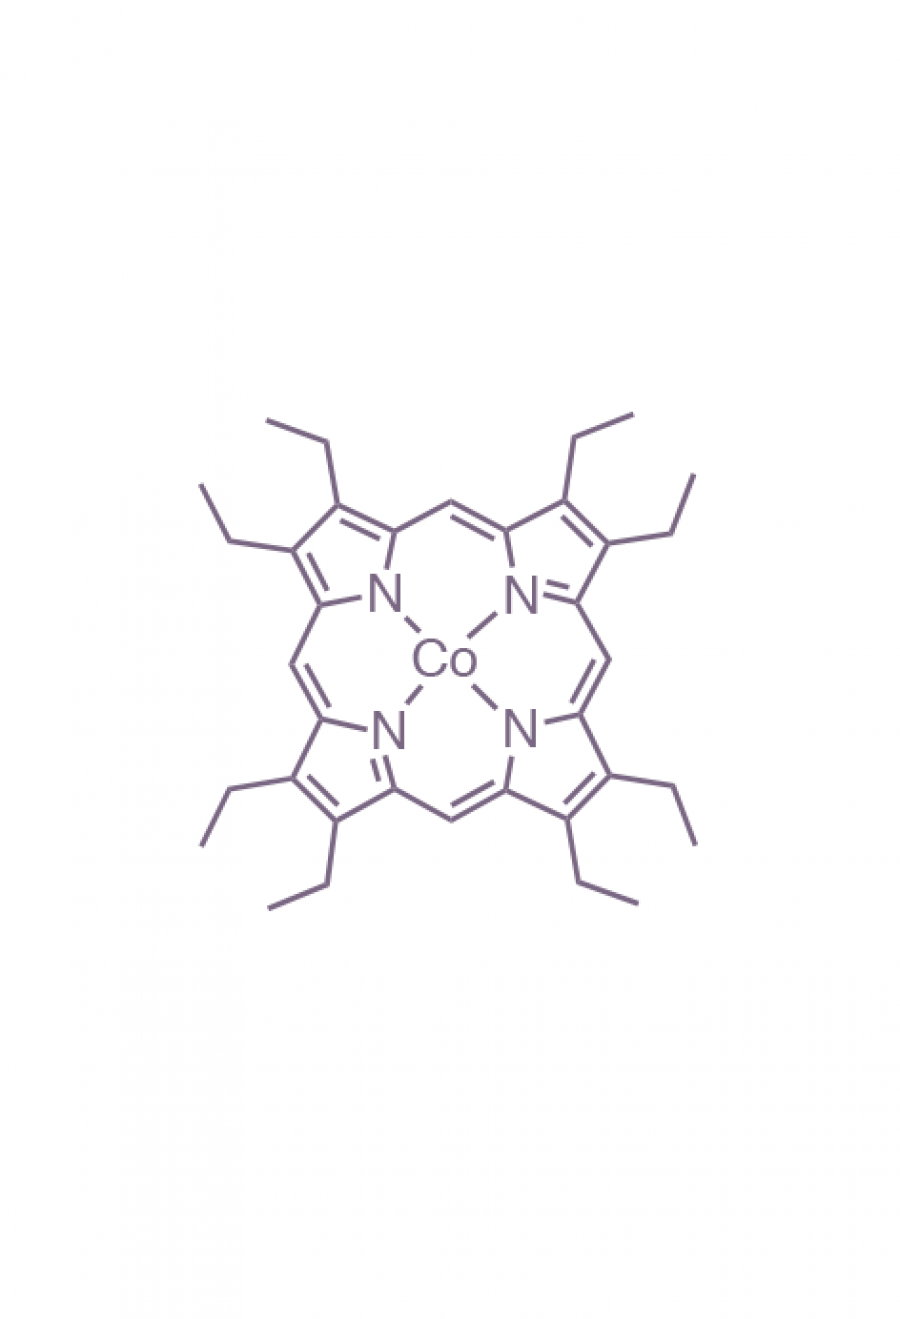 cobalt(II) 2,3,7,8,12,13,17,18-(octaethyl)porphyrin